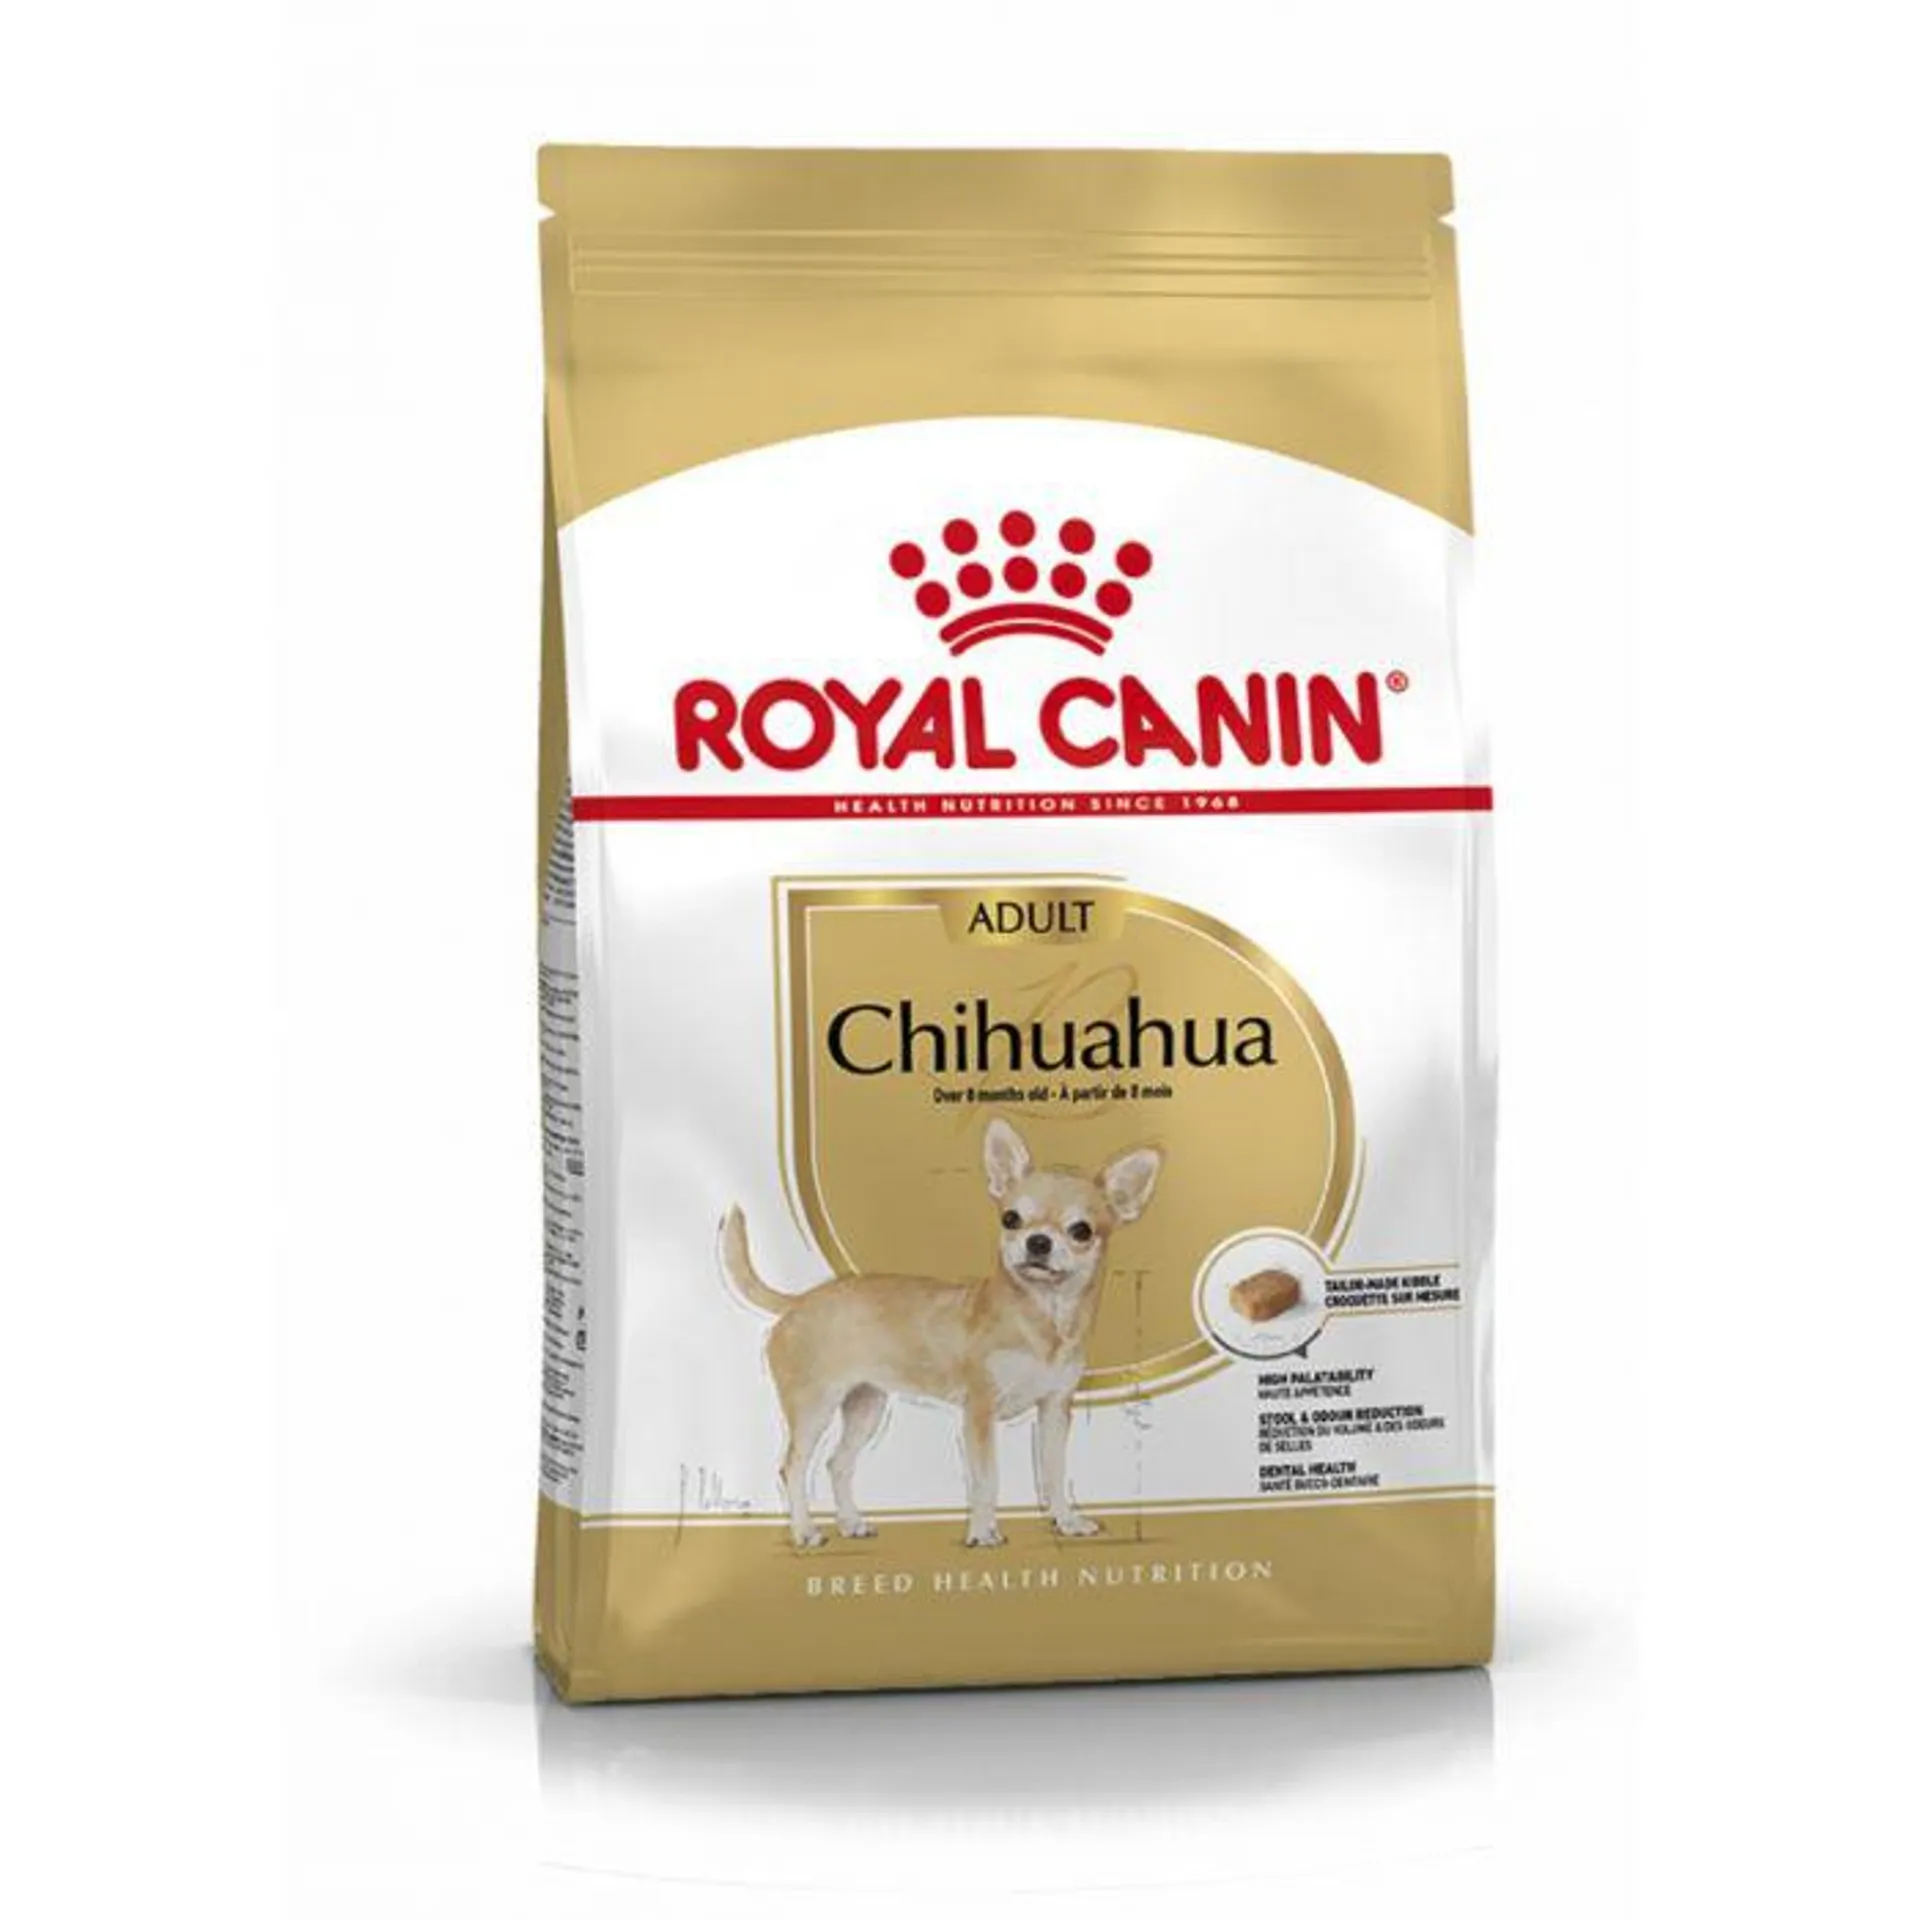 Royal Canin Chihuahua Adult Dry Dog Food - 1.5kg